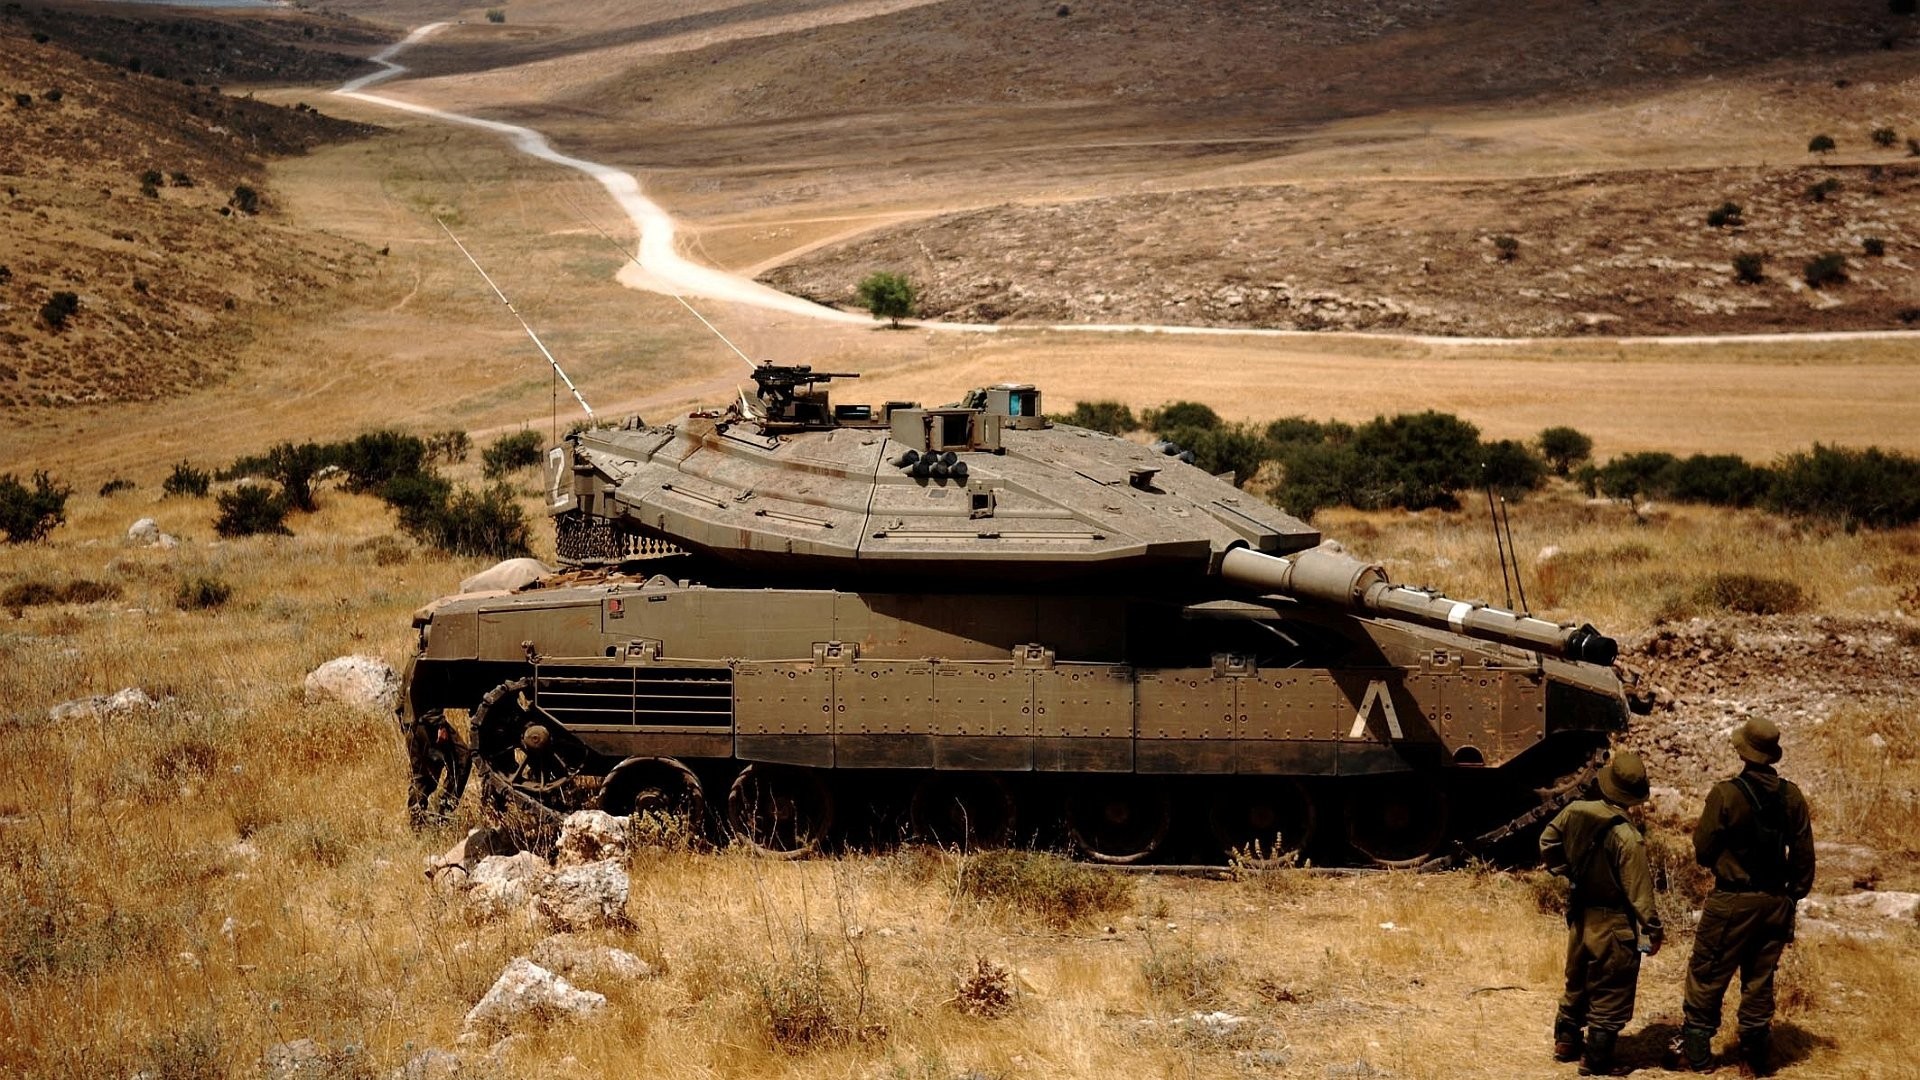 1920x1080 tank merkava mark iv military israel defense forces peace wallpaper JPG 618 kB HD Wallpaper